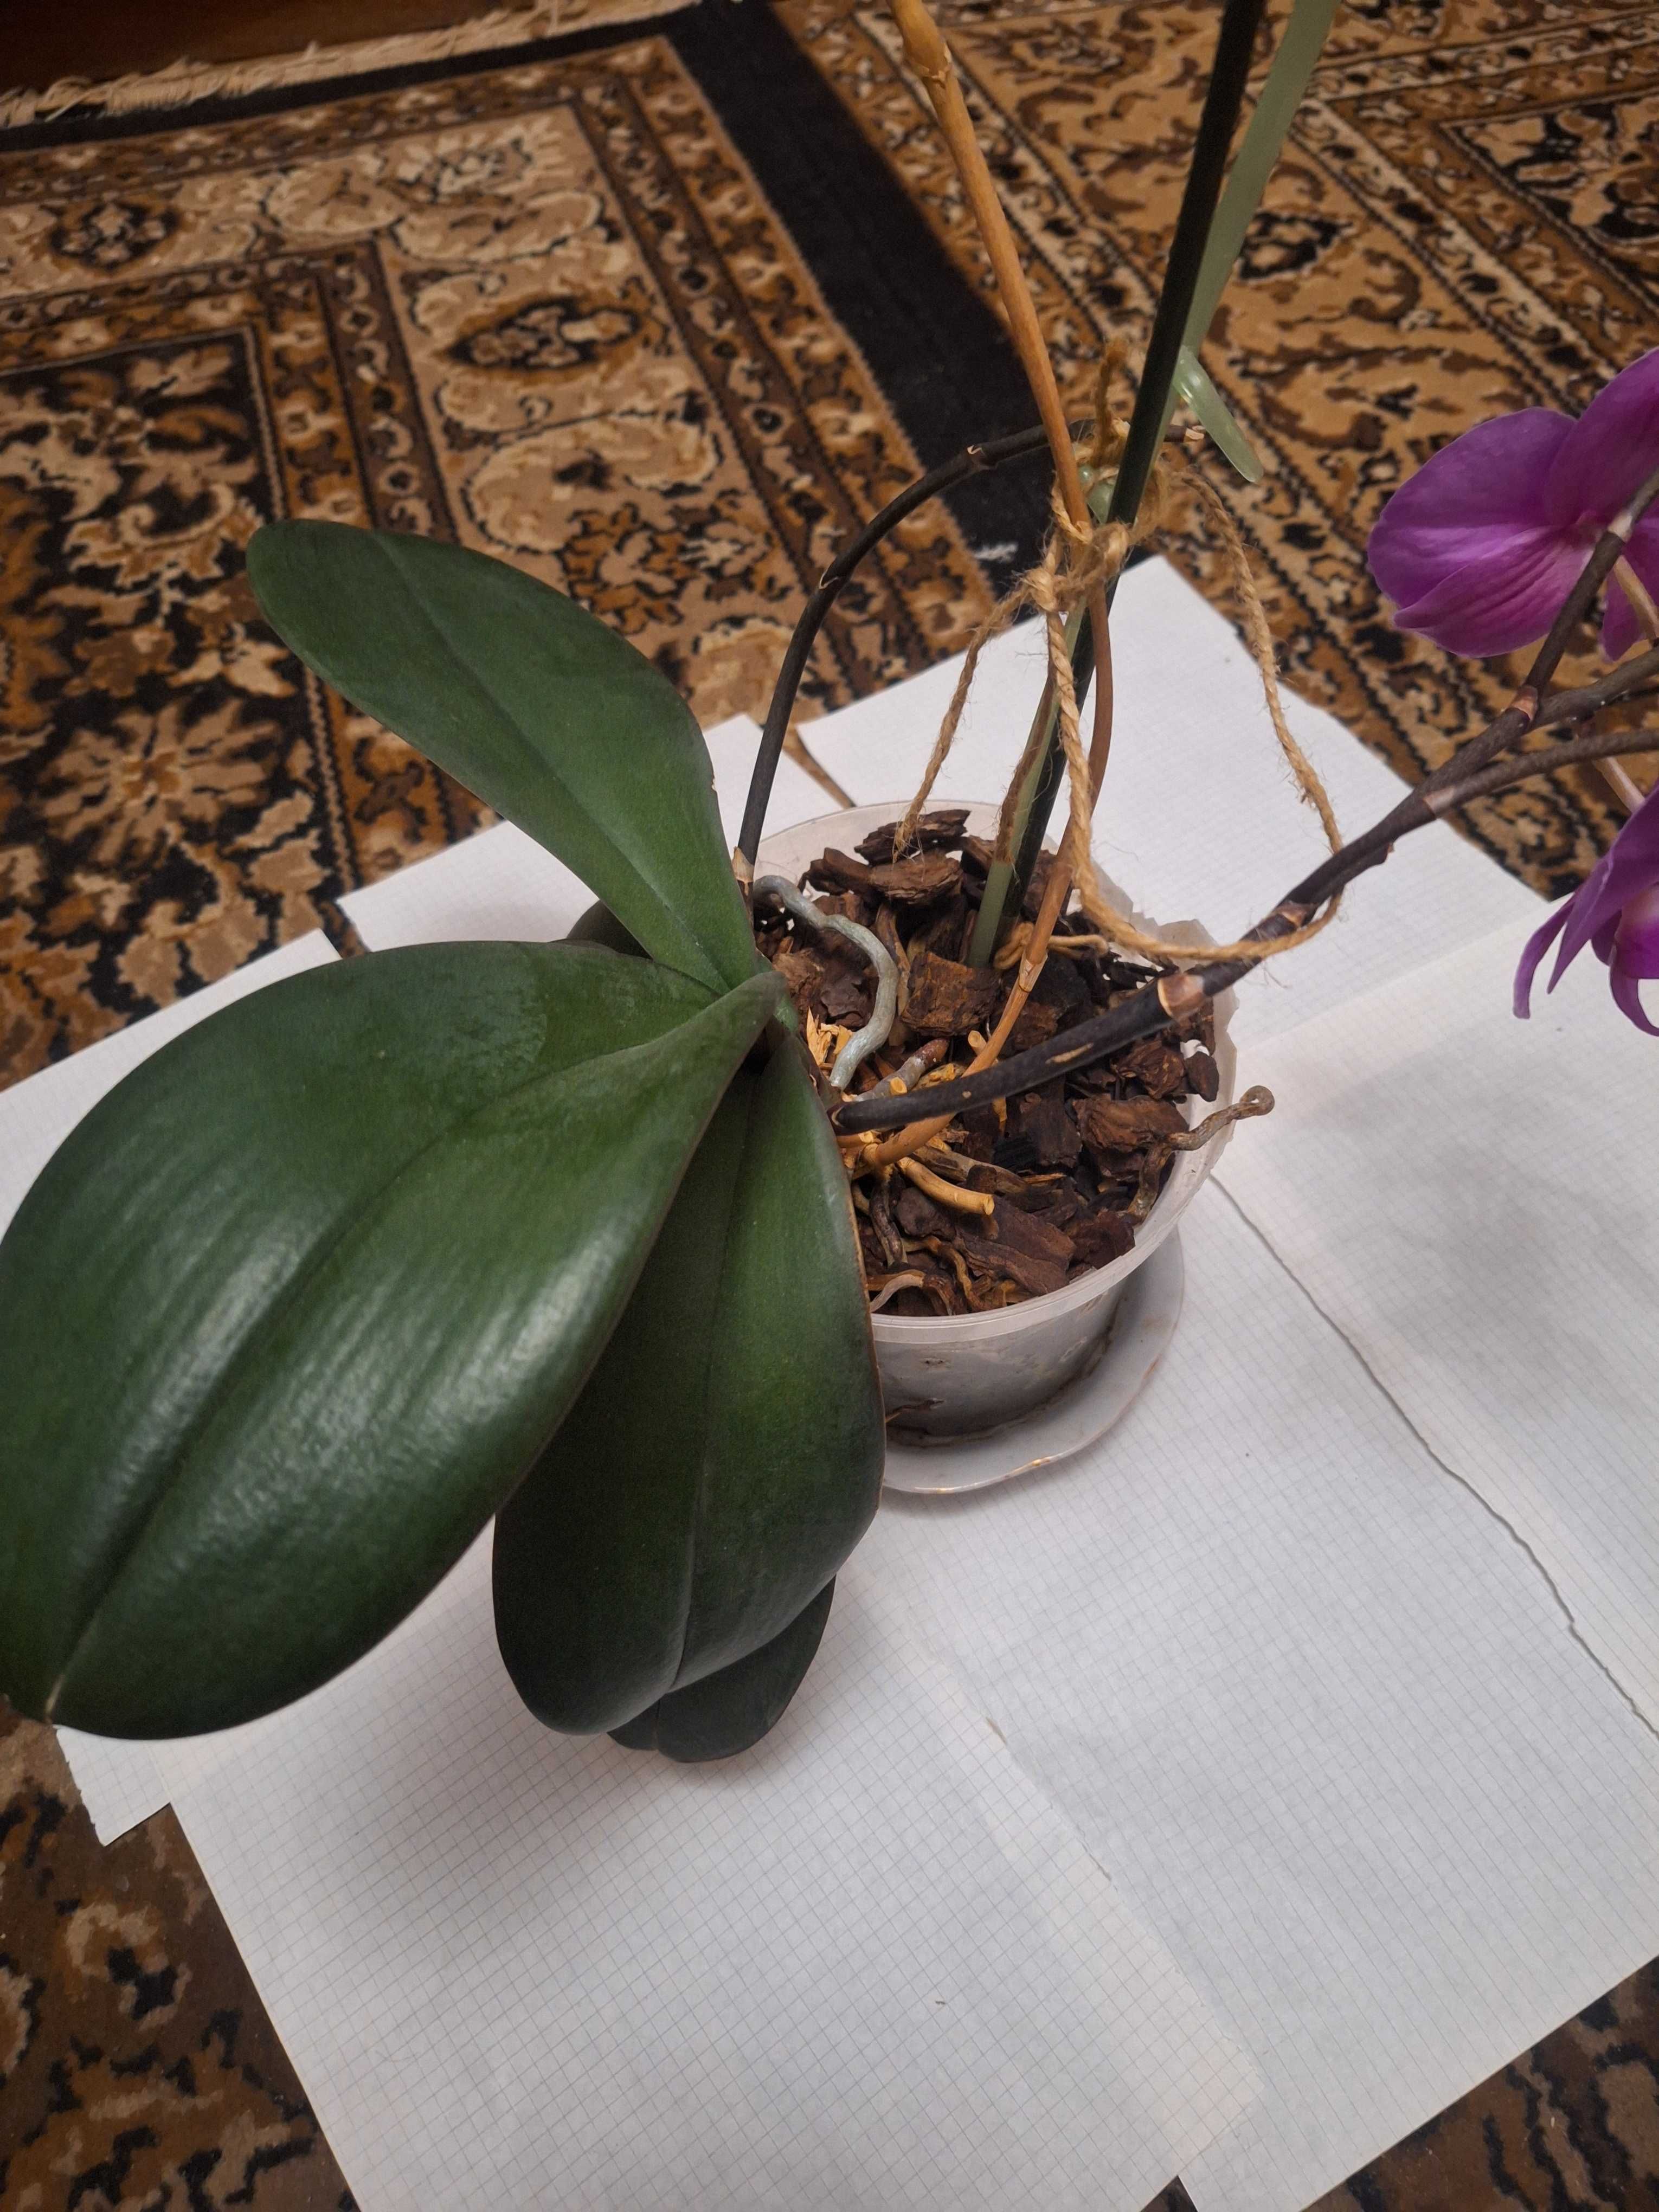 Орхідея фіолетова квітуча